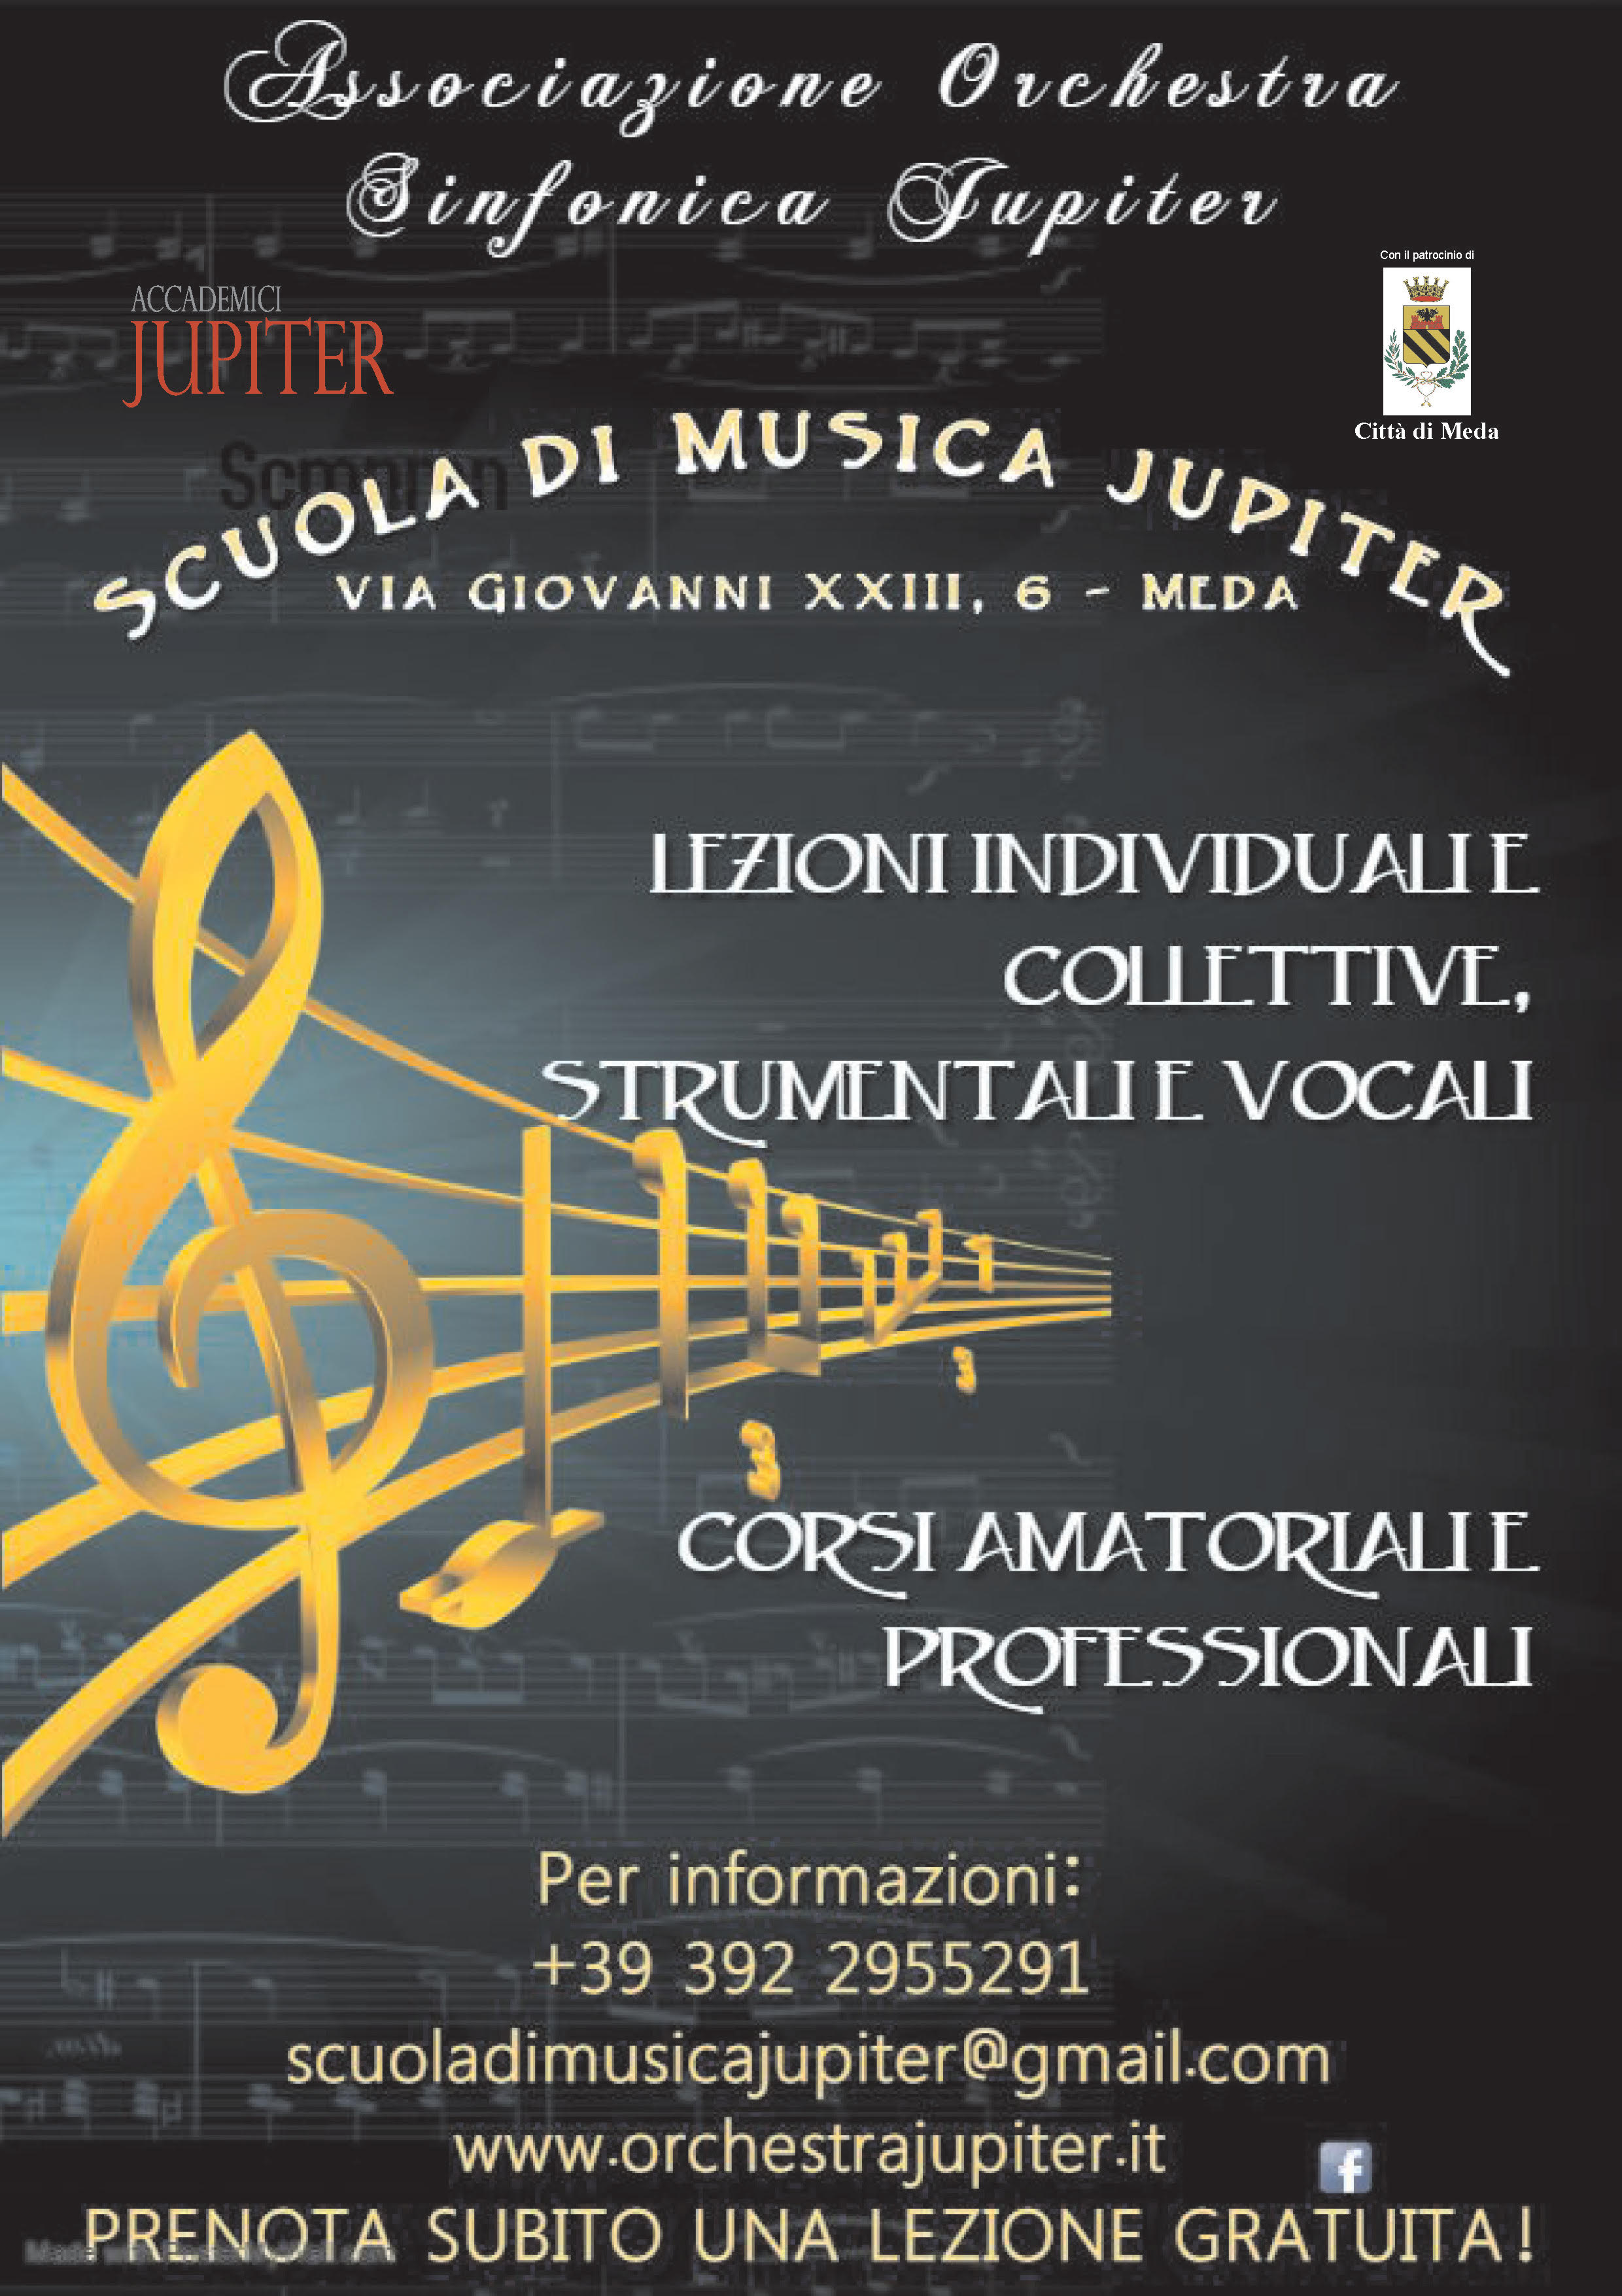 Immagine Scuola di Musica Jupiter